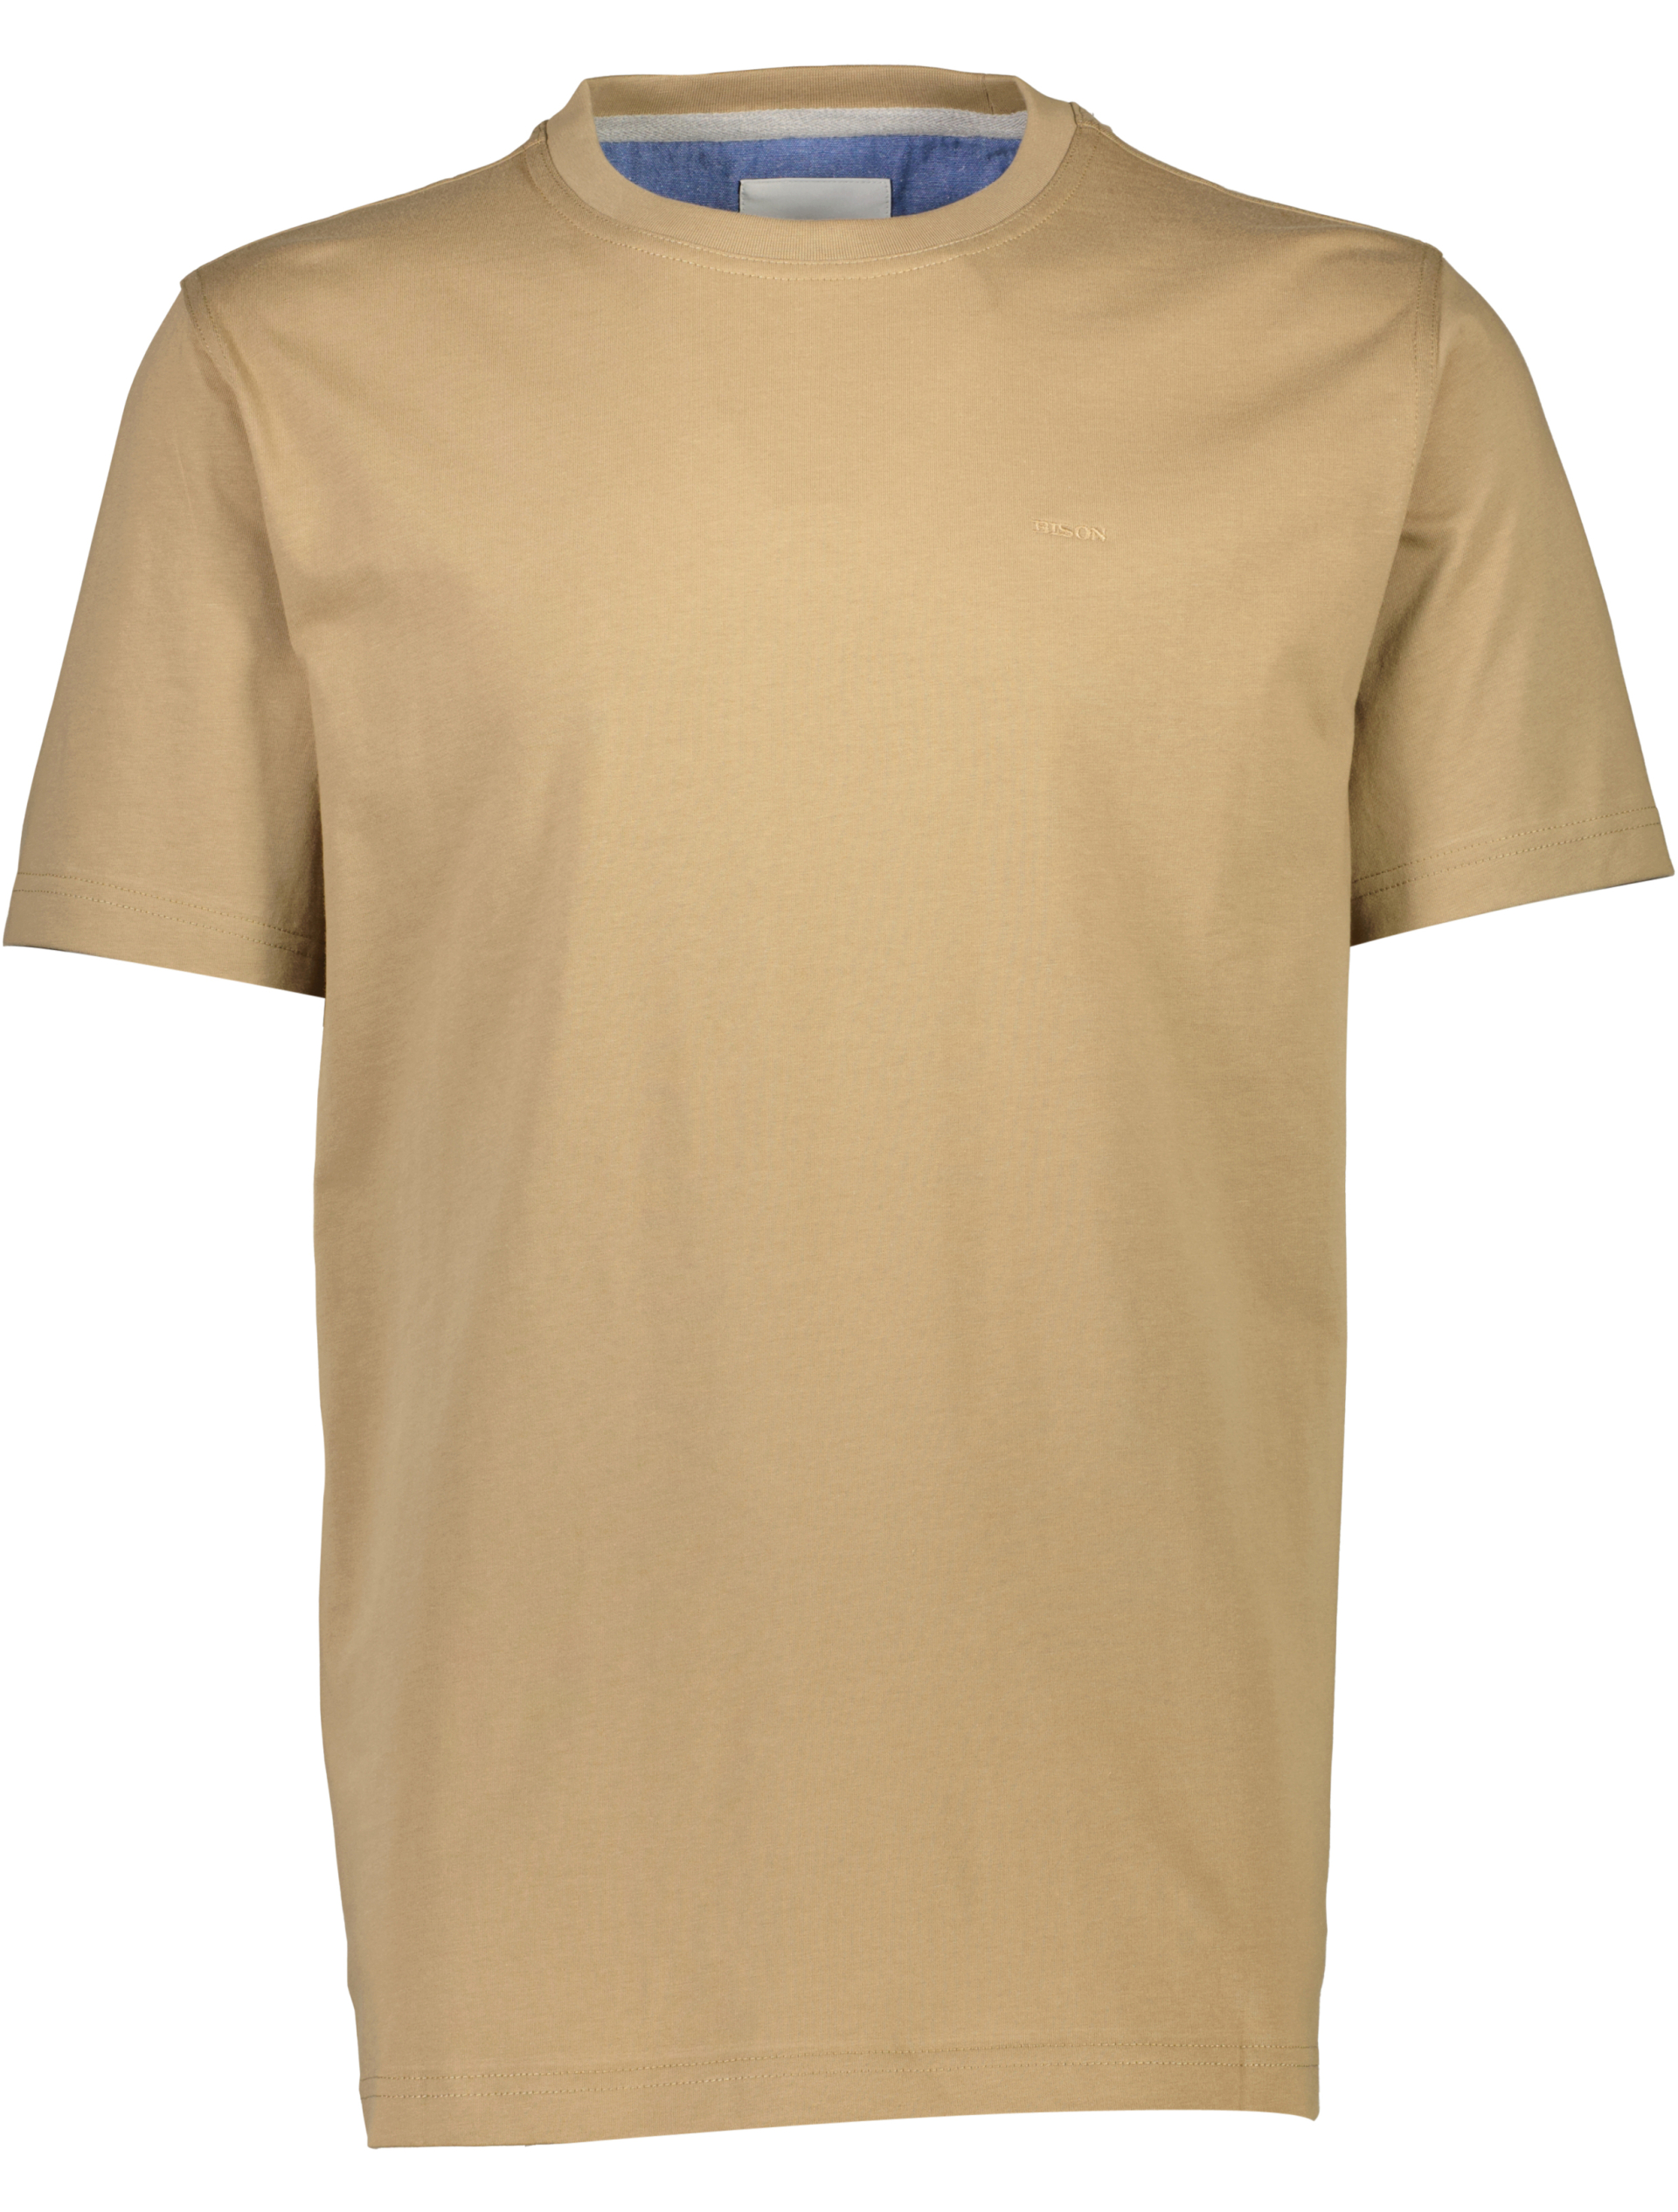 Bison T-shirt sand / dk sand 224